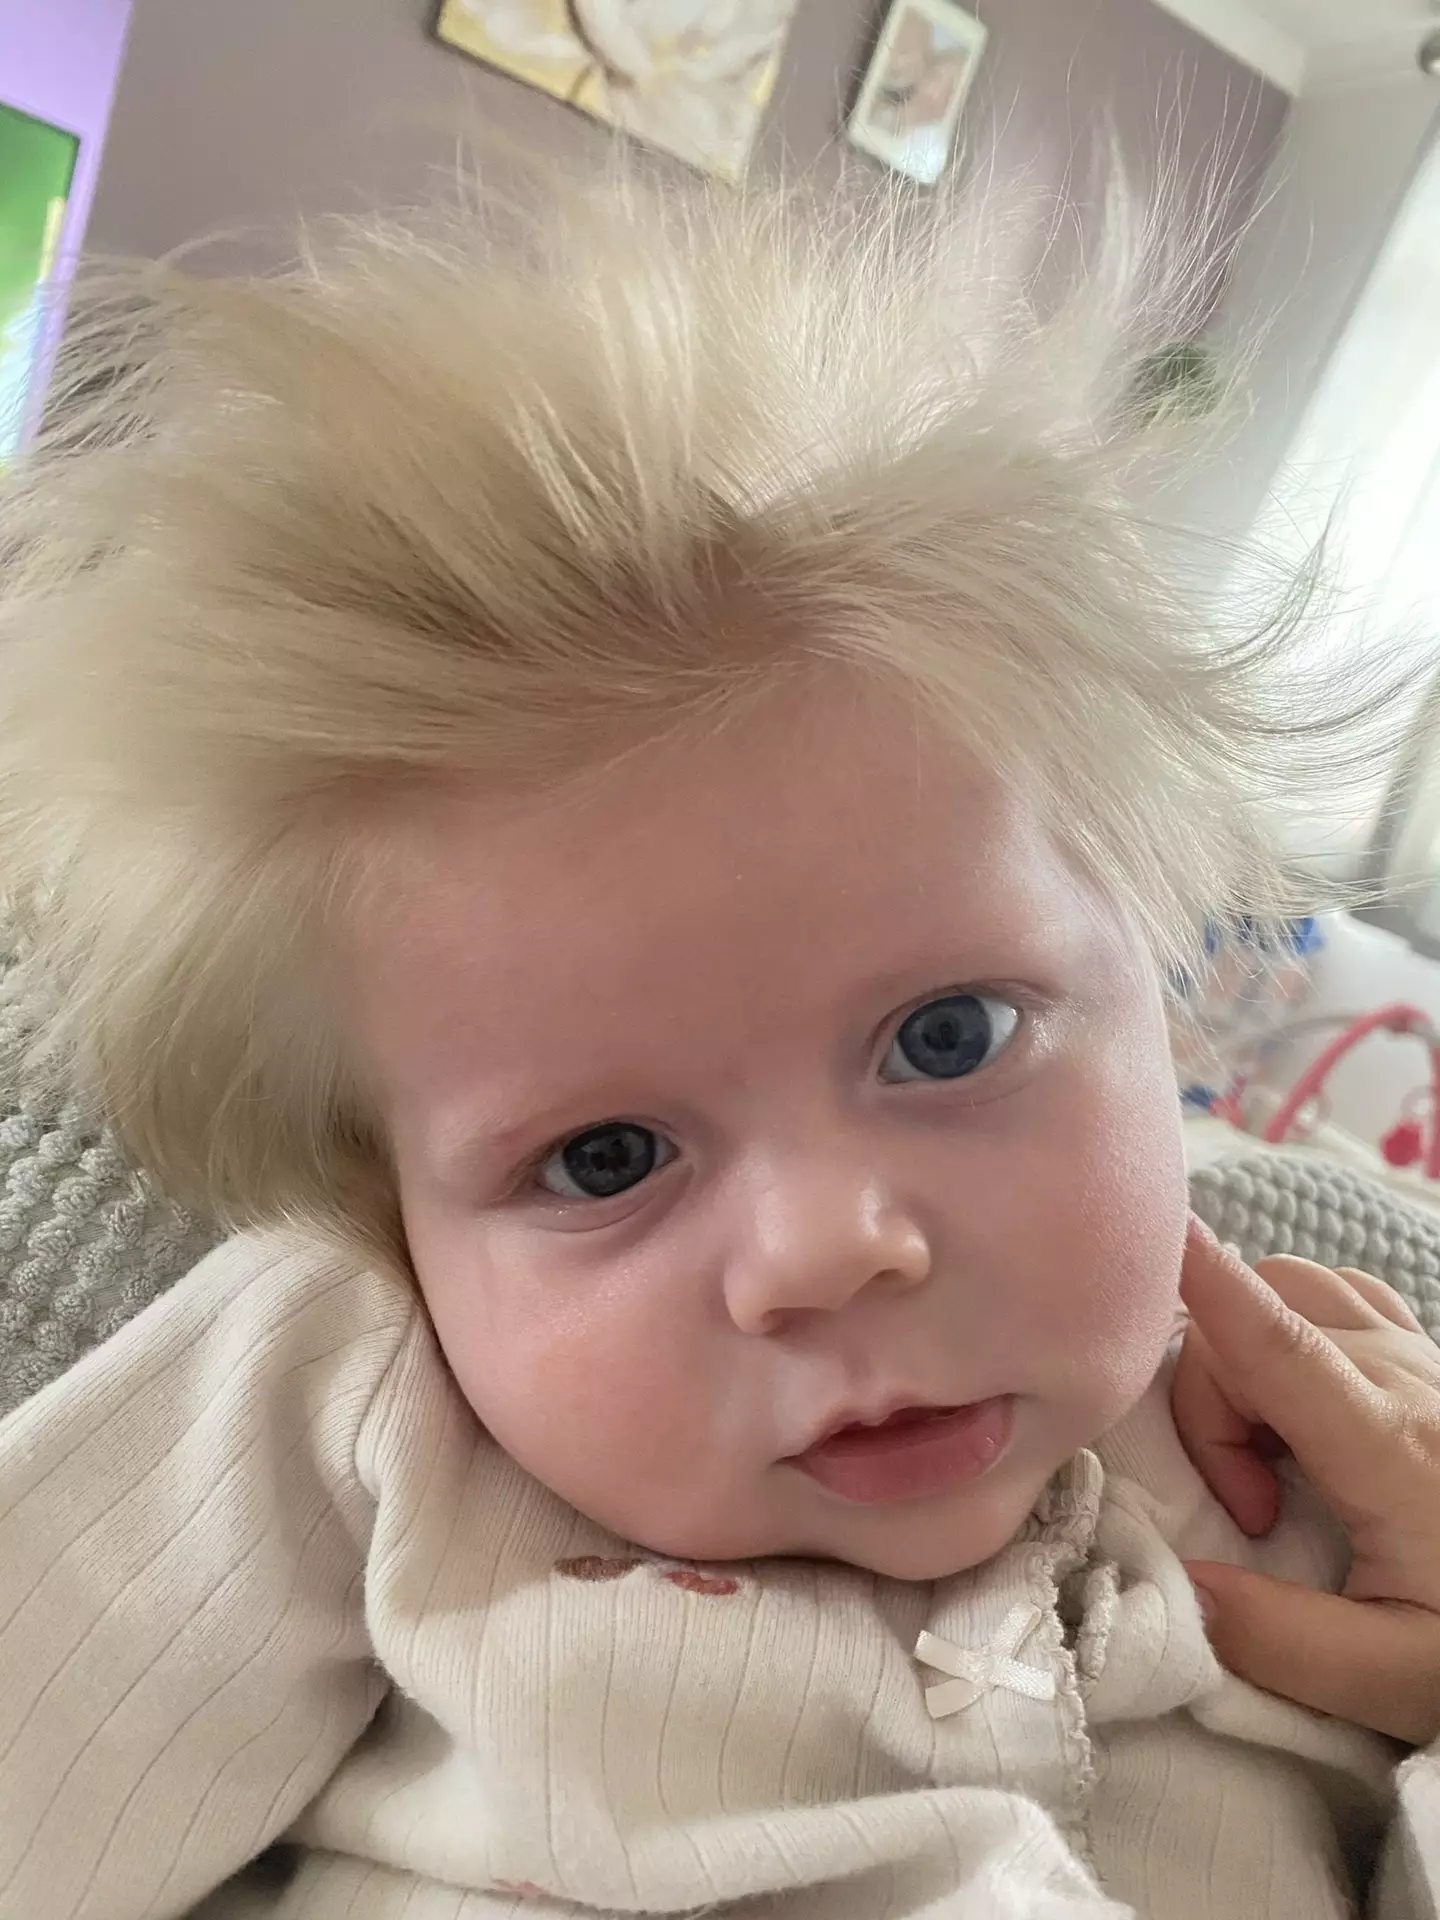 Lottie's hair has been compared to Boris Johnson's (